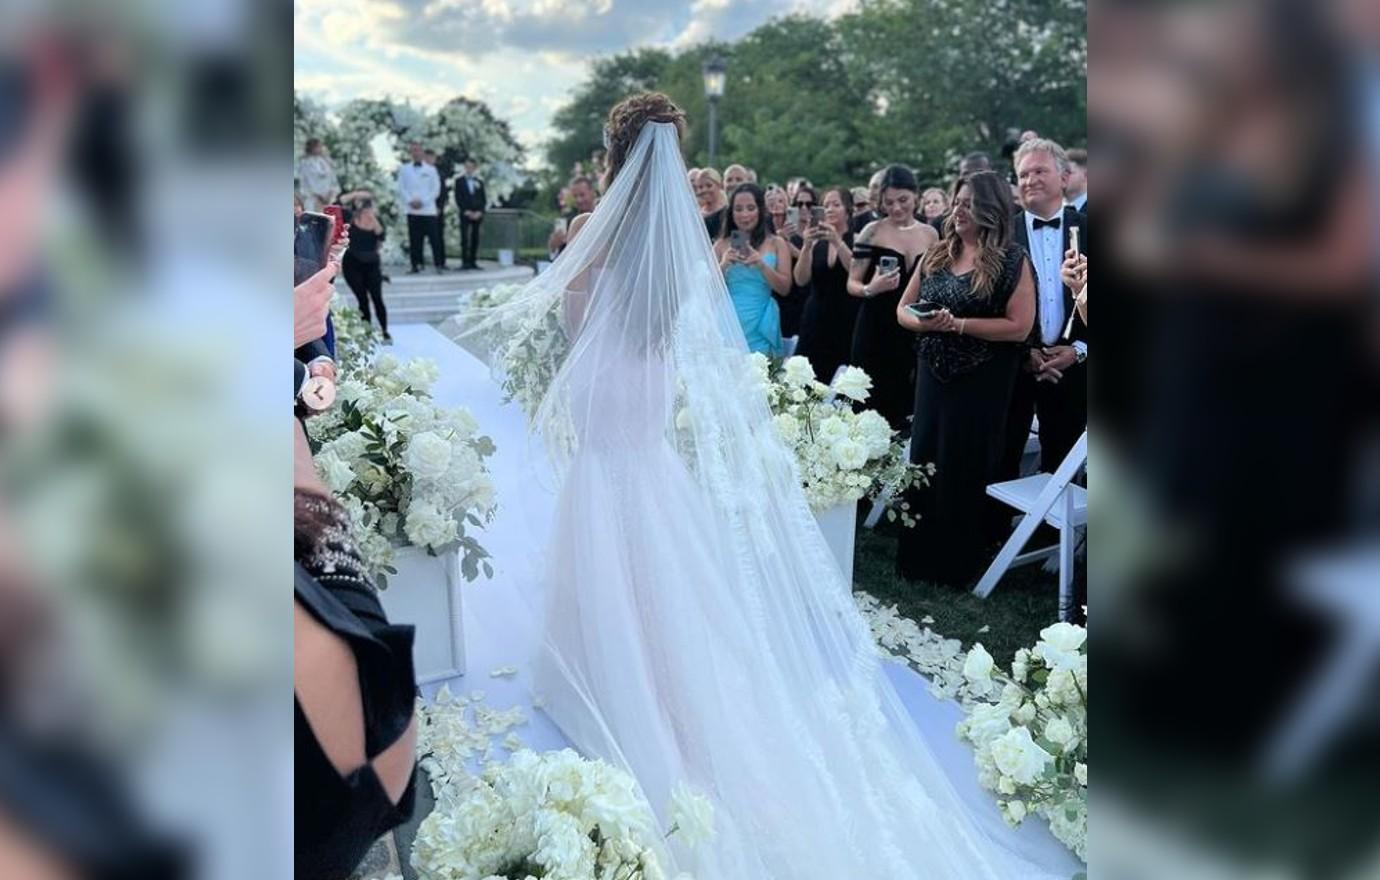 Inside Teresa Giudice's Wedding: The Dress, The Guests & More